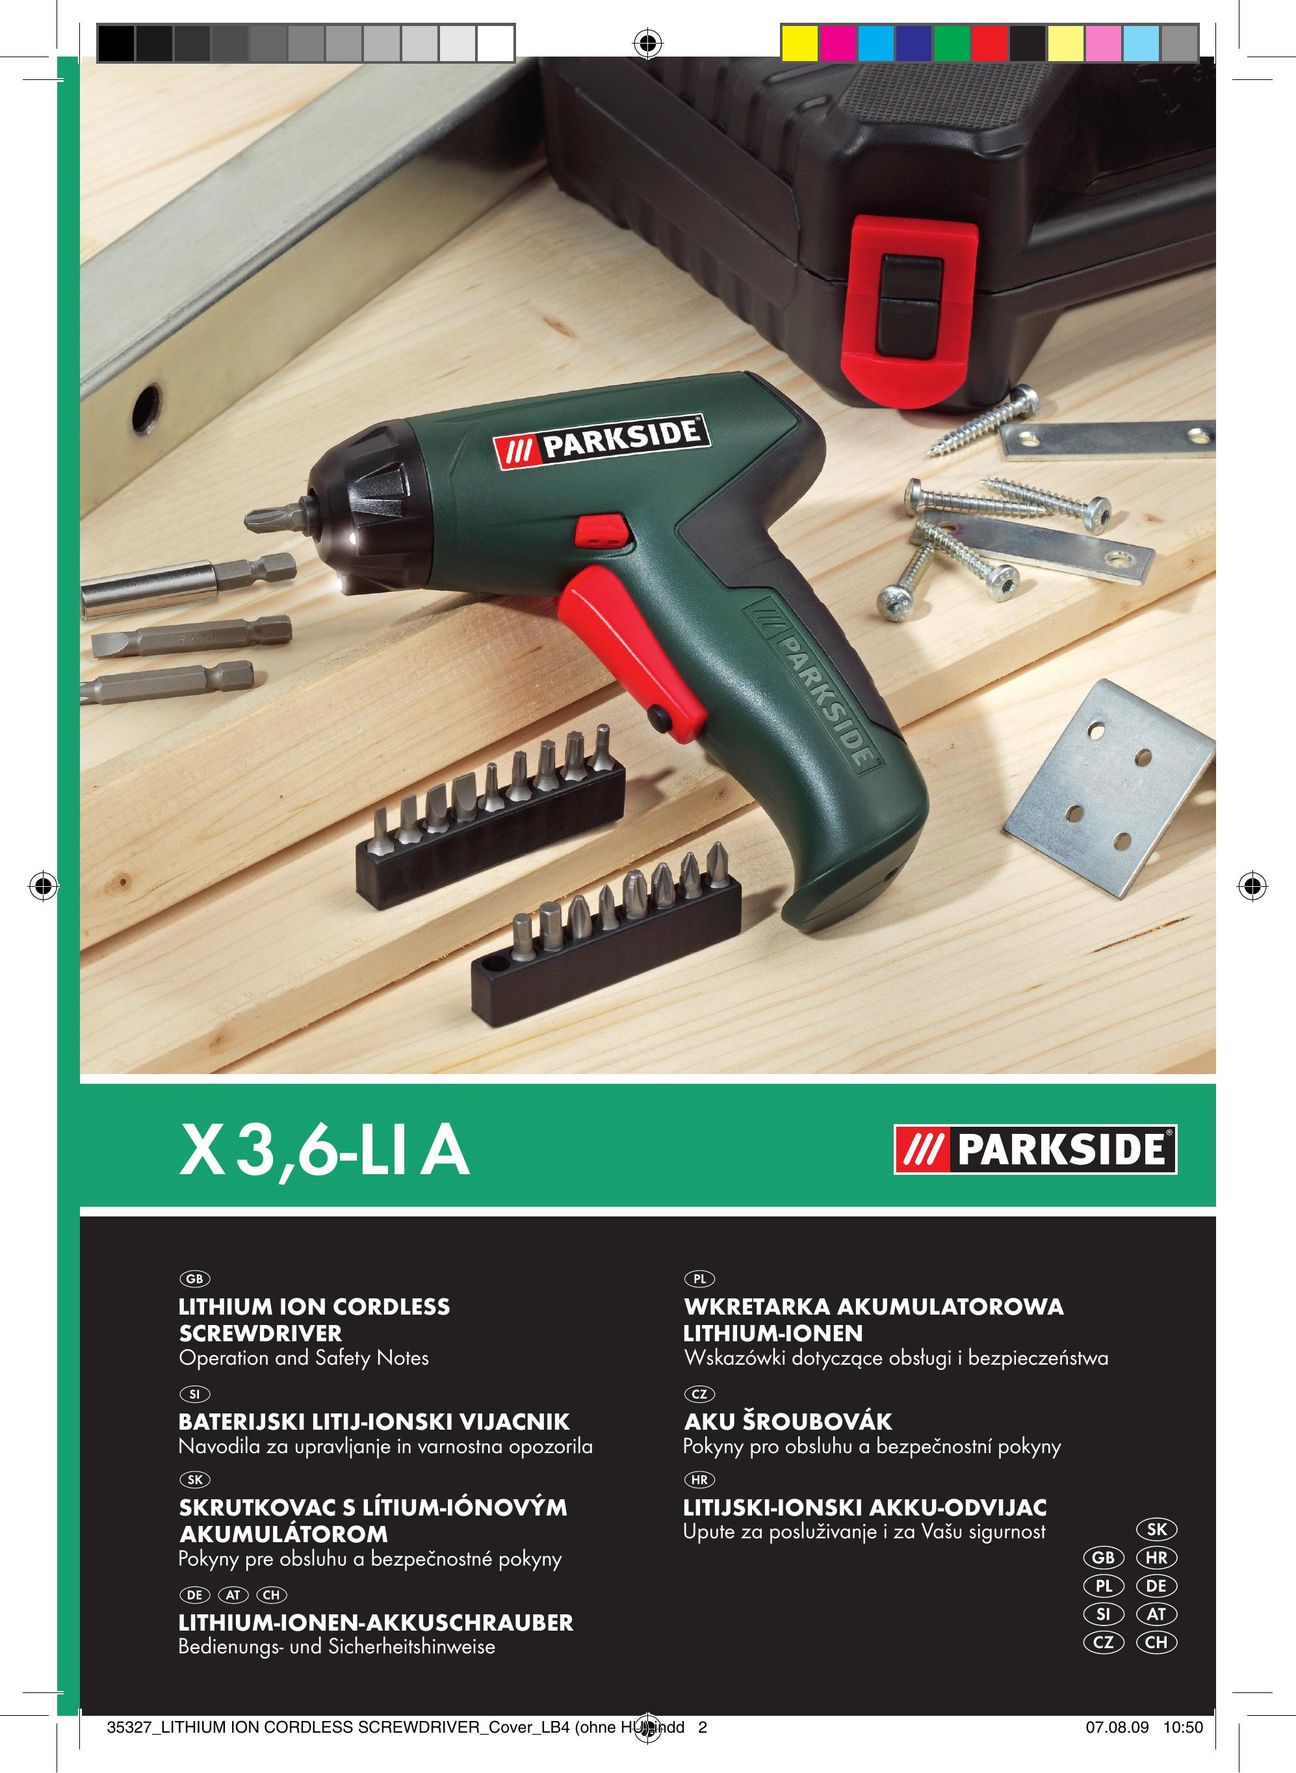 Parkside X3 Power Screwdriver User Manual